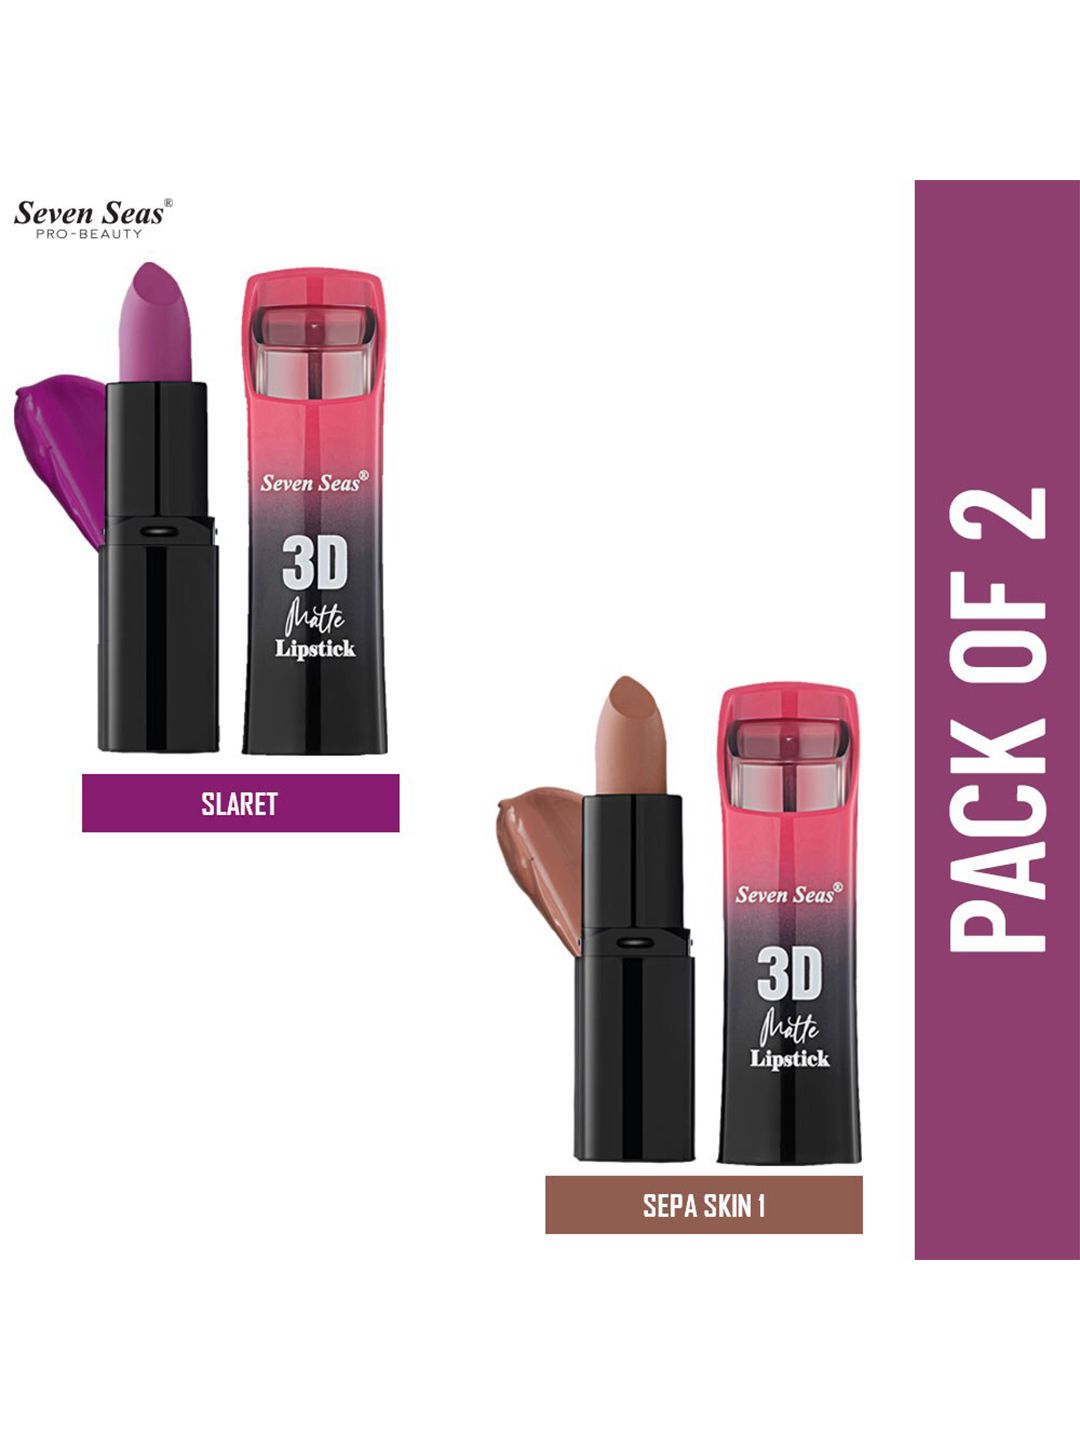 Seven Seas Set of 2 3D Matte Lipstick - Clarlet 311 & Sepa Skin 1 320 Price in India